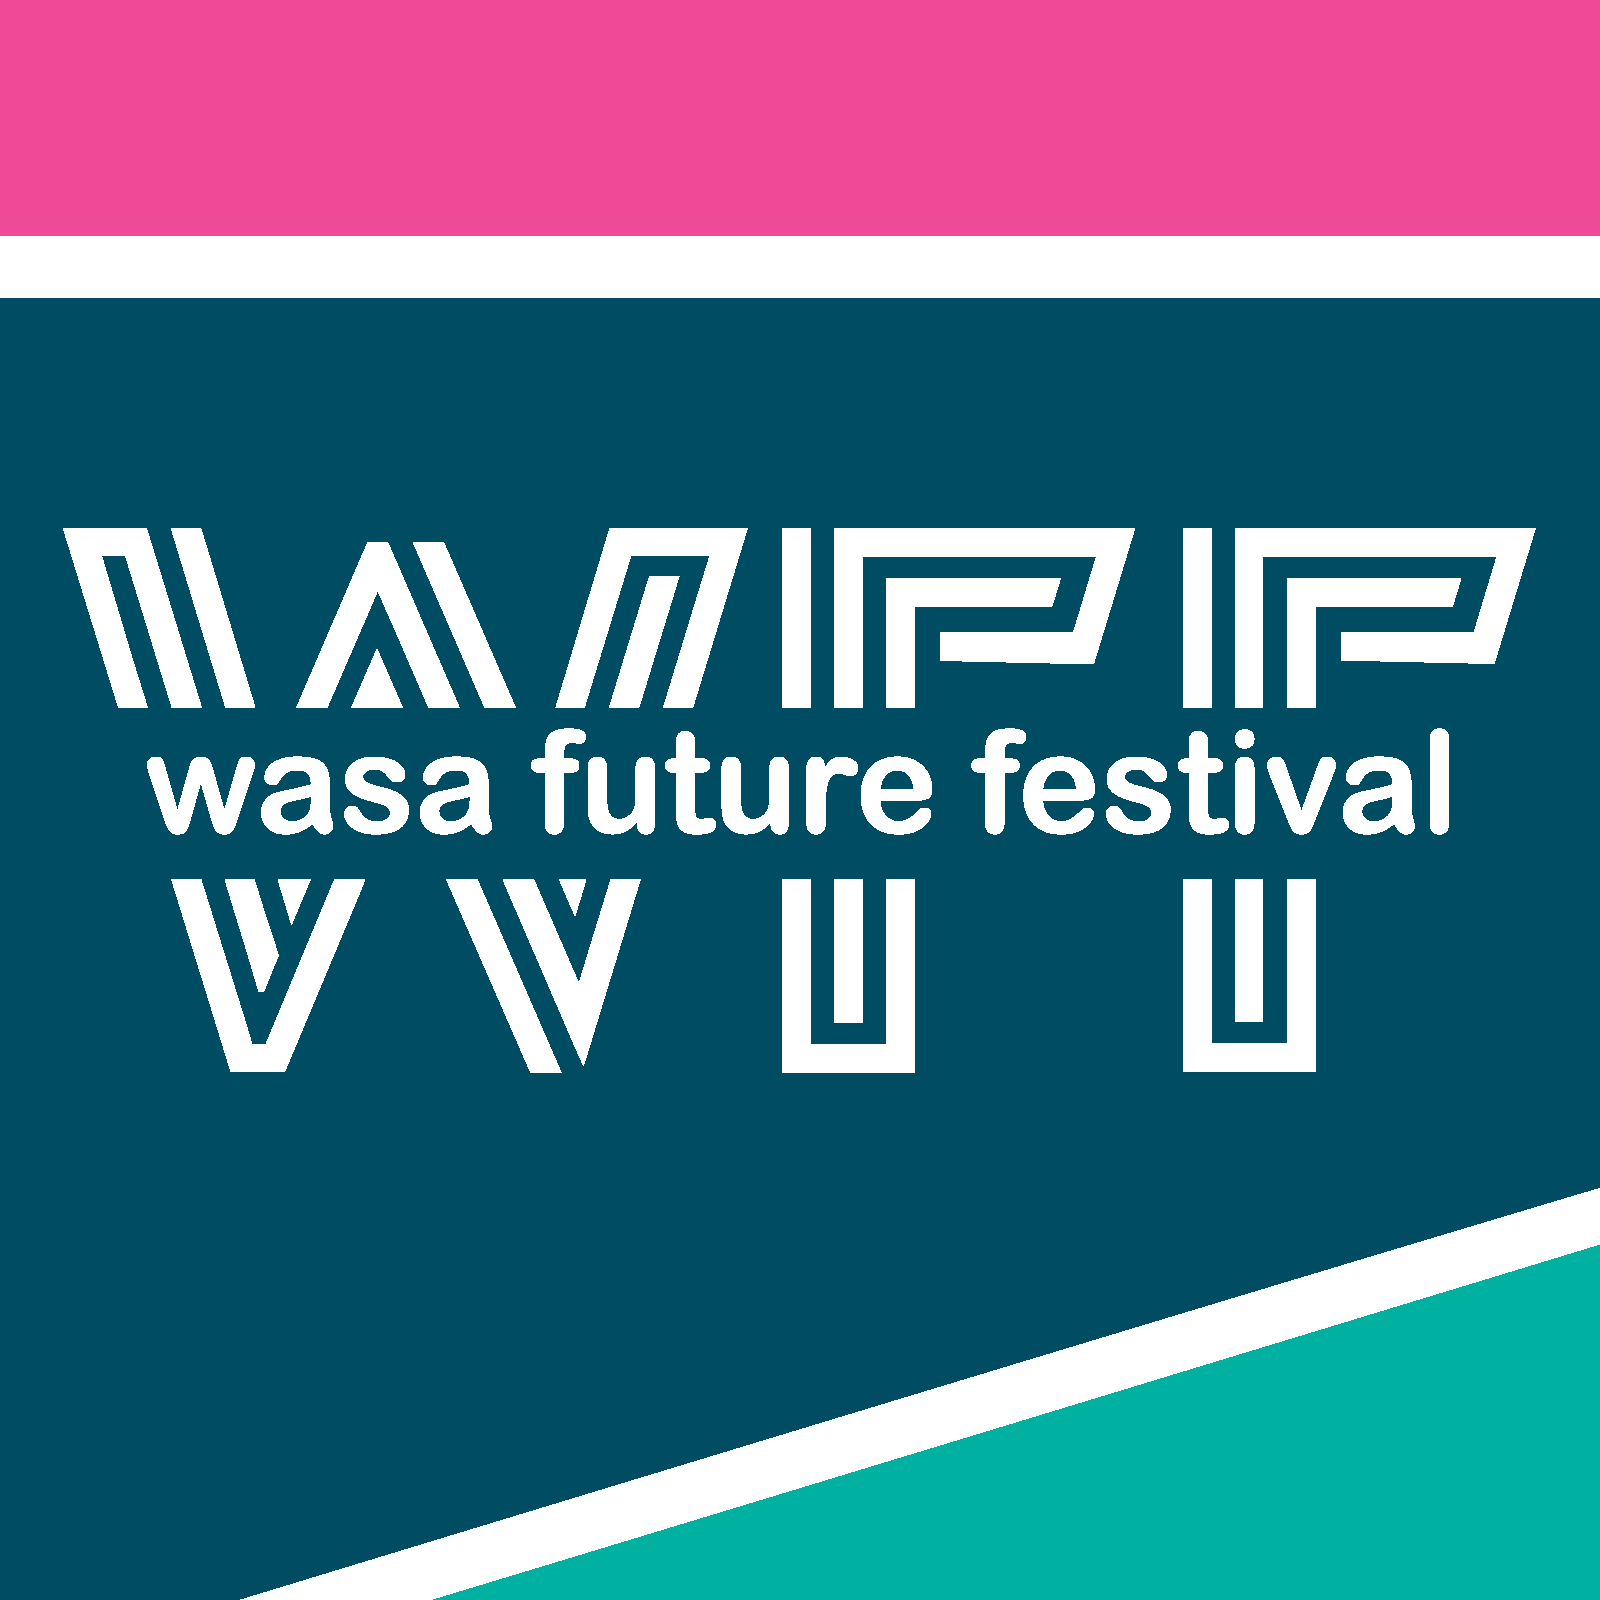 Front page - Wasa Future Festival